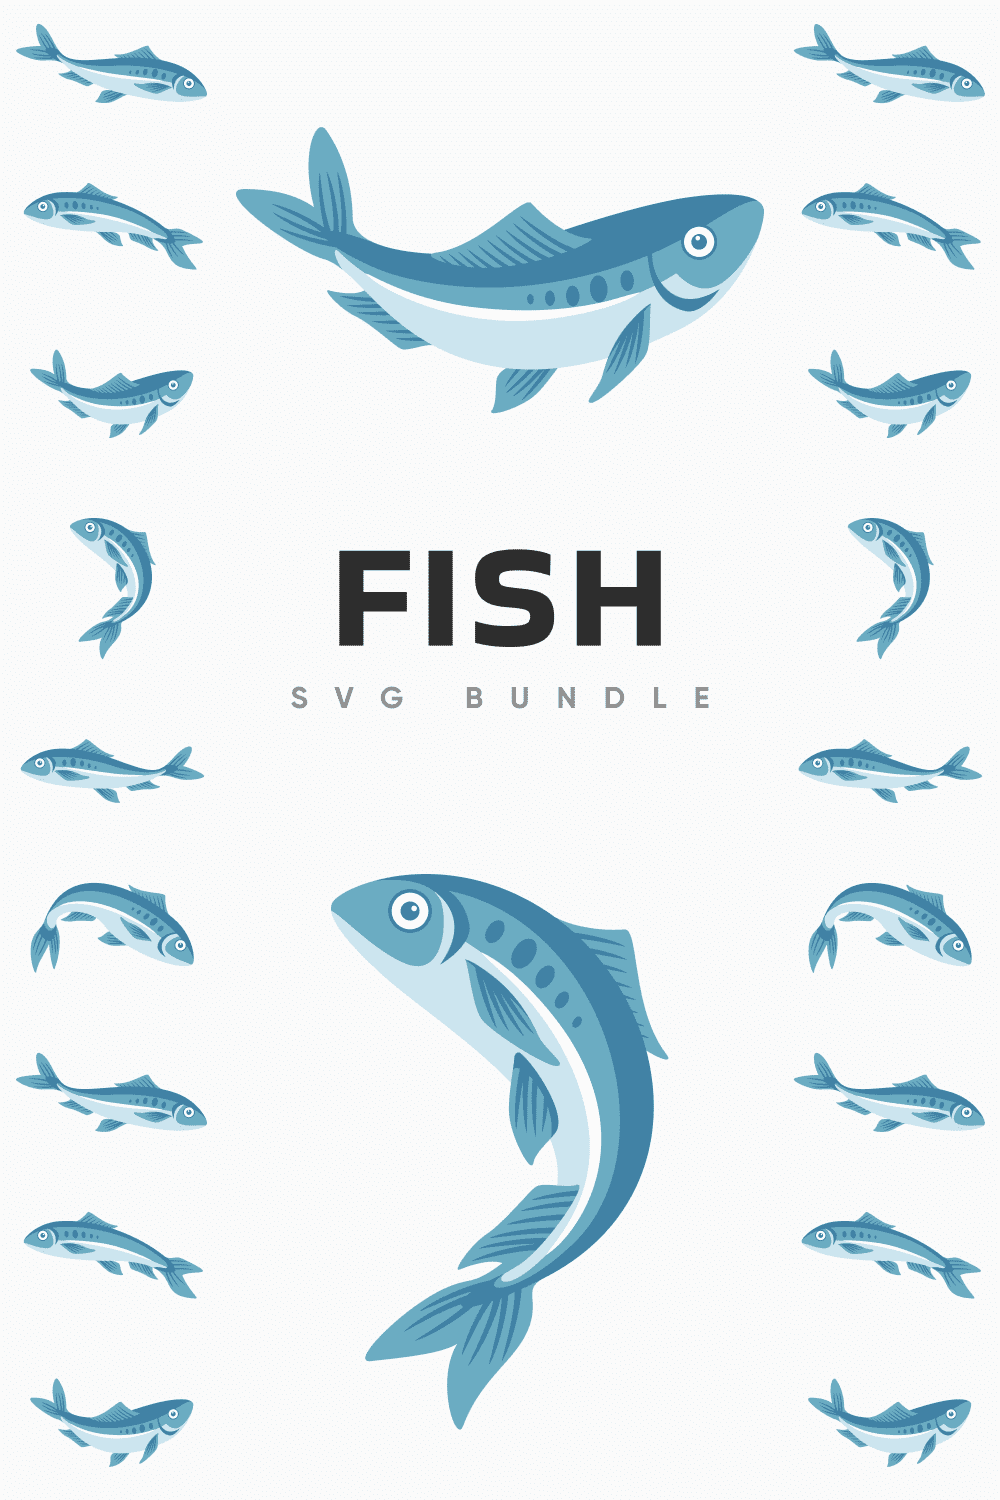 fish svg files bundle pinterest image.